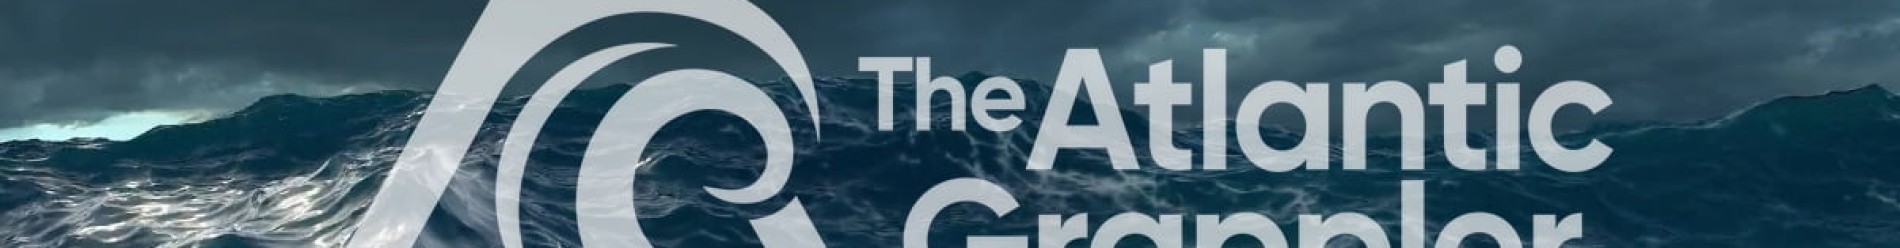 The Atlantic Grappler